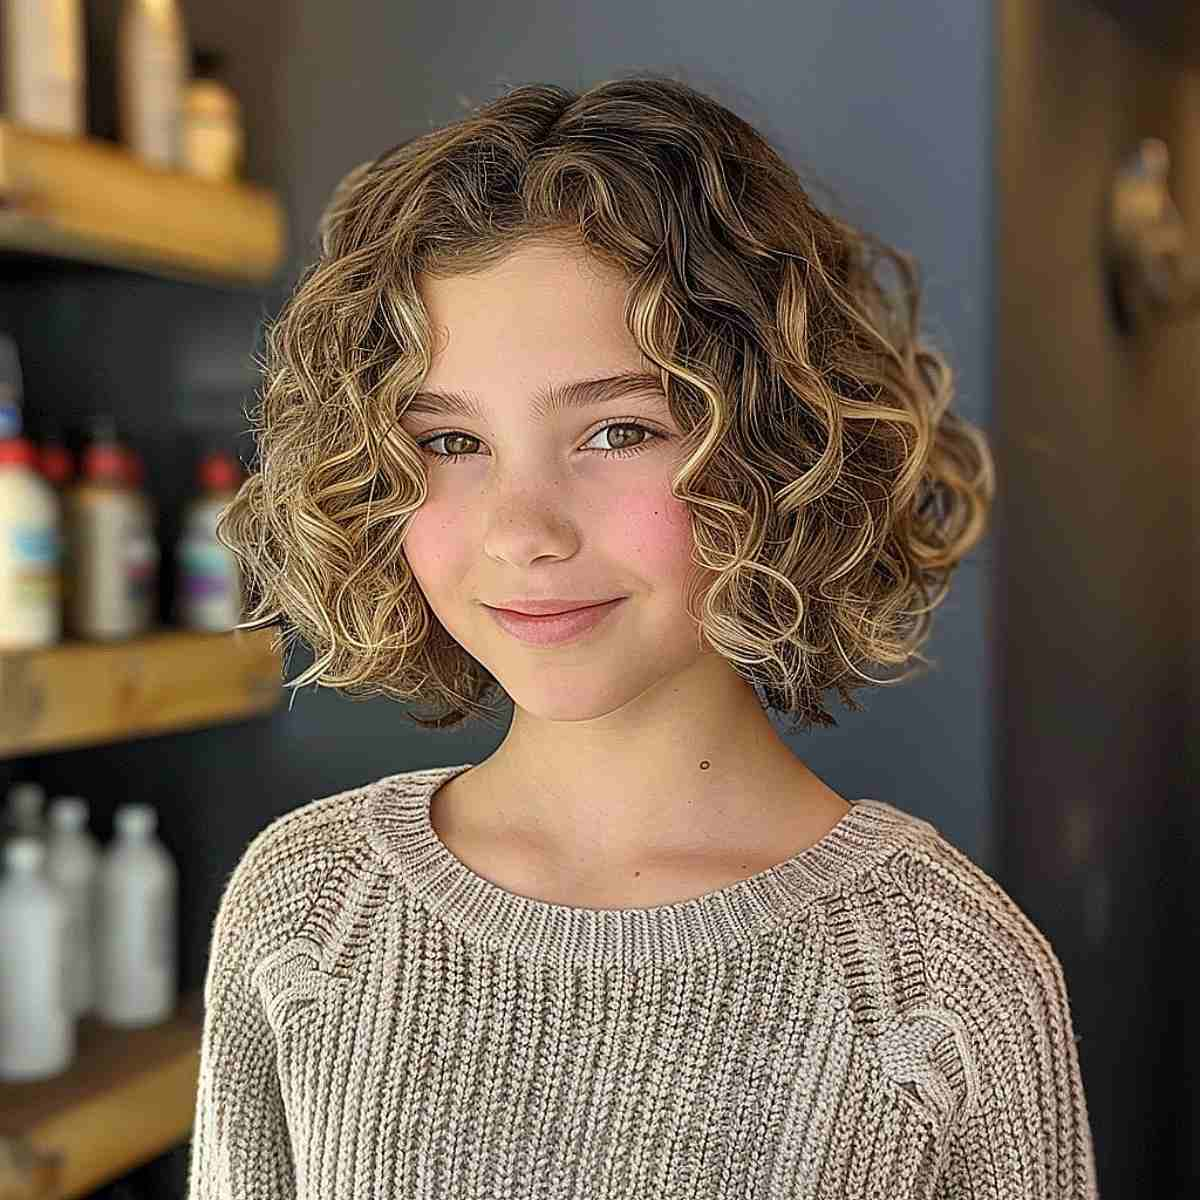 Curly hair tutorial - the half-up braid hairstyle - Hair Romance